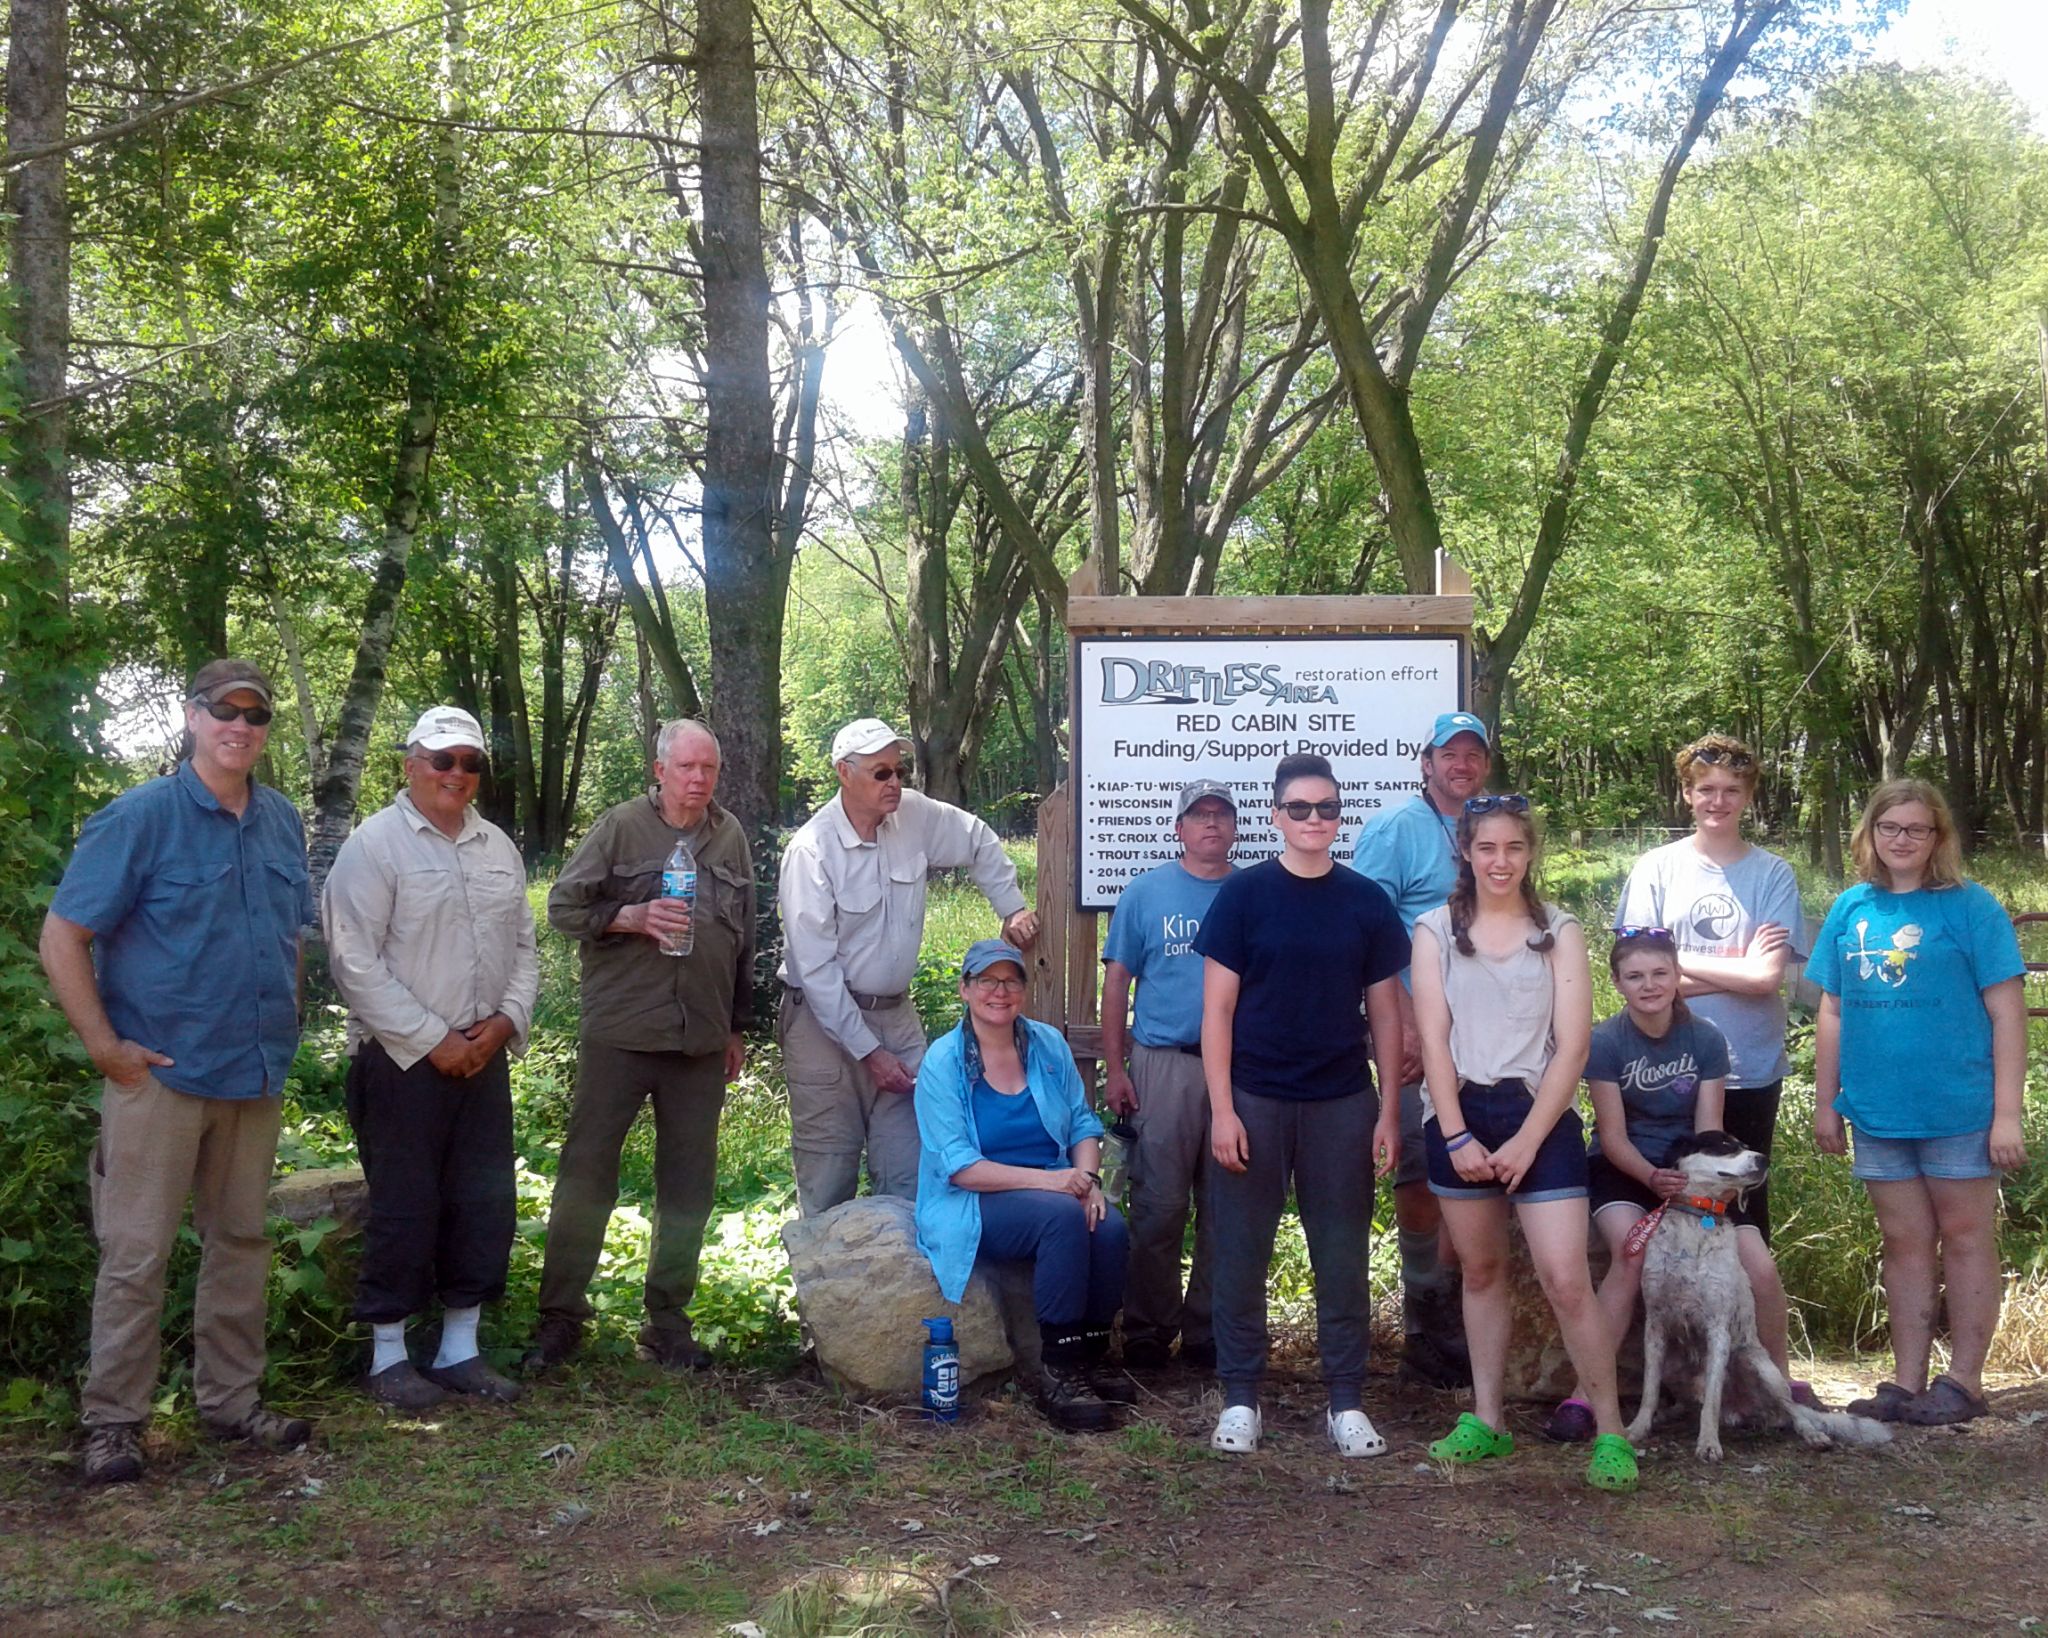 Maple Makes the Kinni River their Studio through Partnership with Kinni River Land Trust